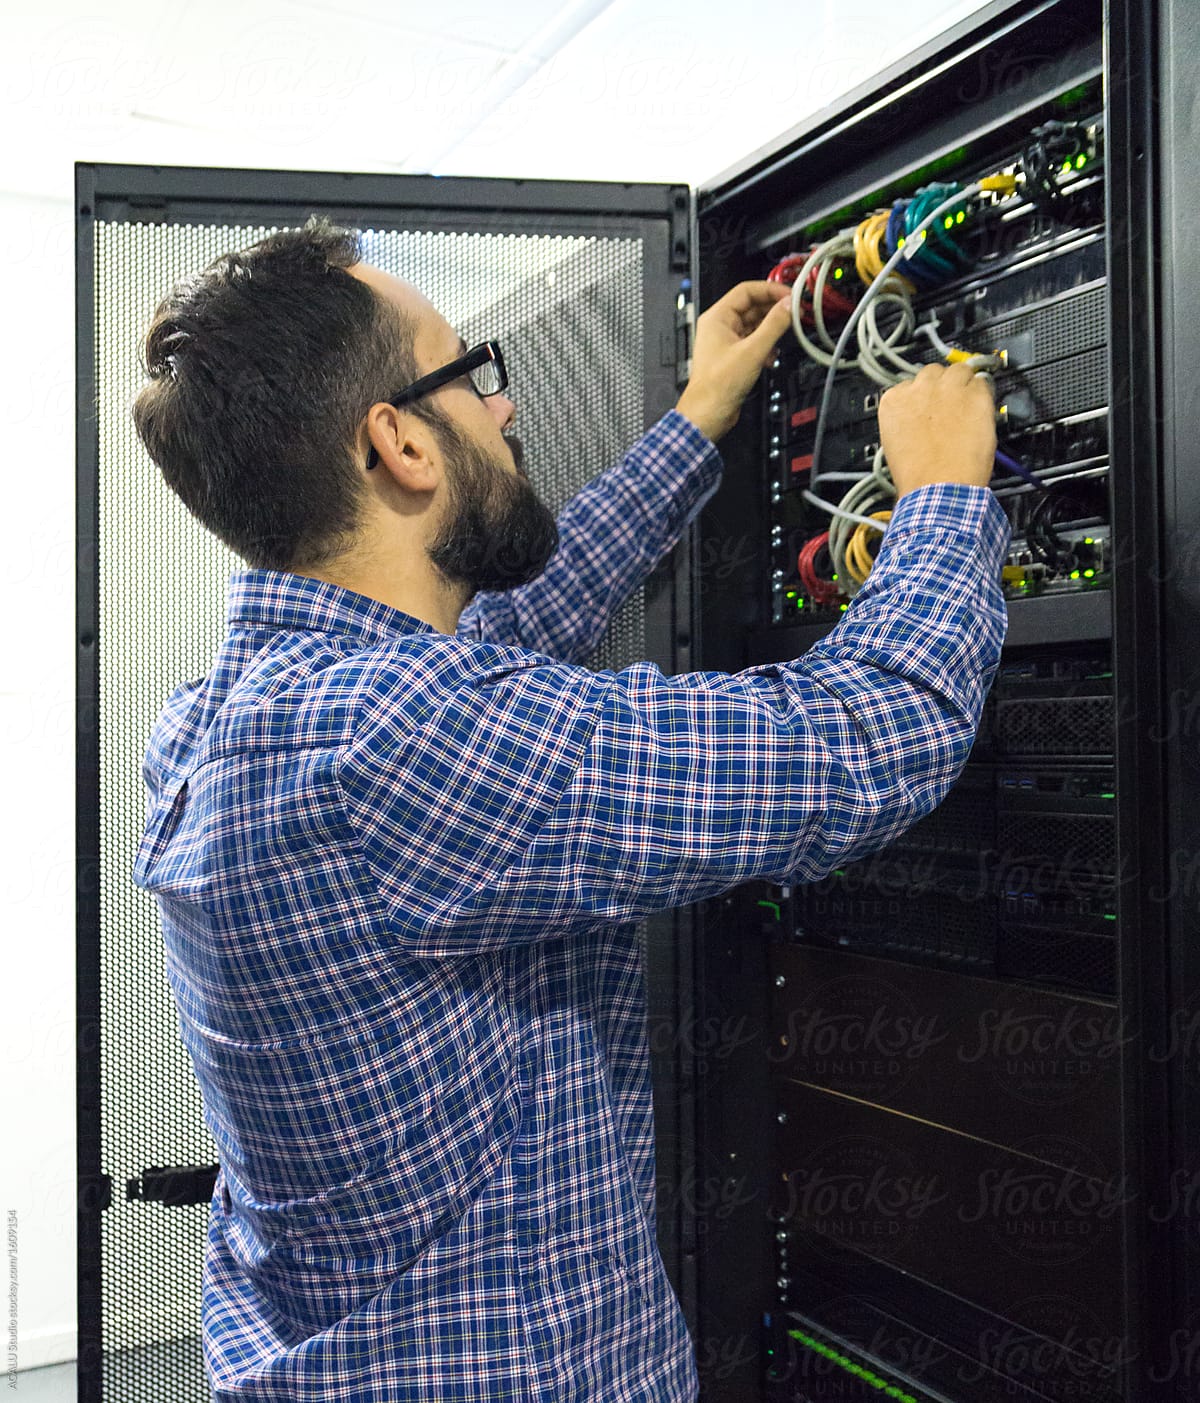 Technician performing maintenance tasks in a server room rack